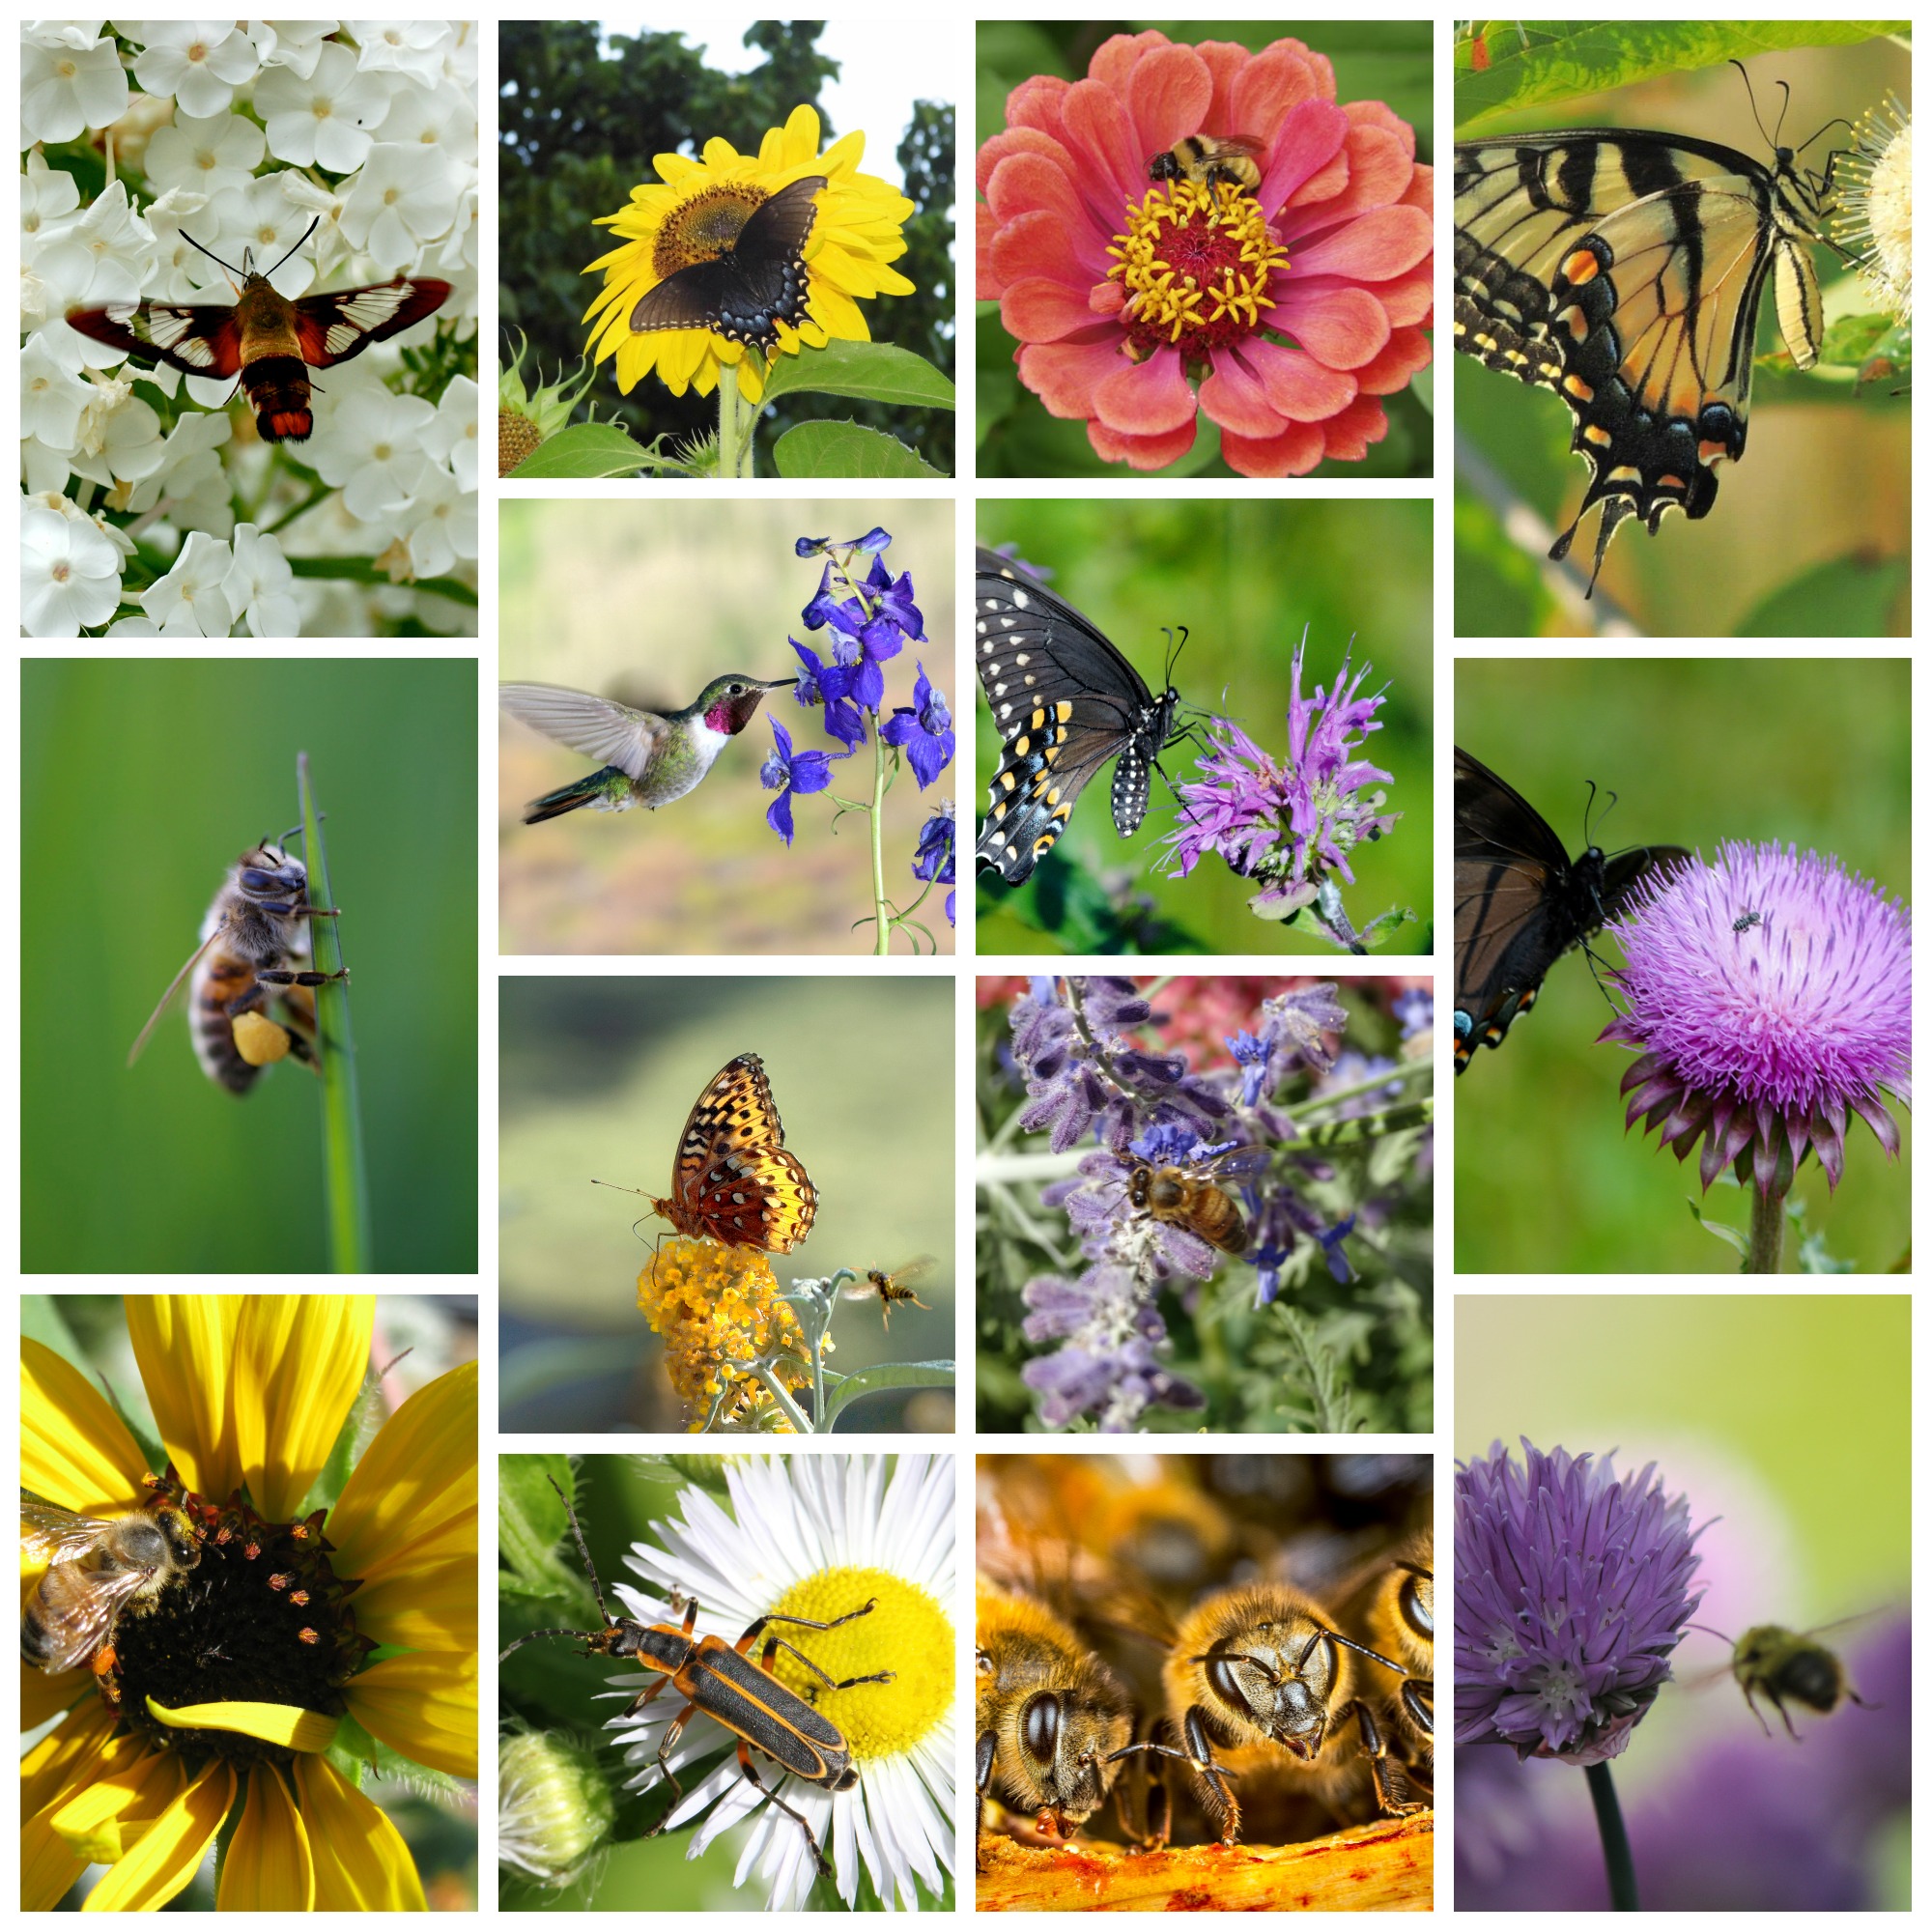 PollinatorRunnersUp - Beyond Pesticides Daily News Blog